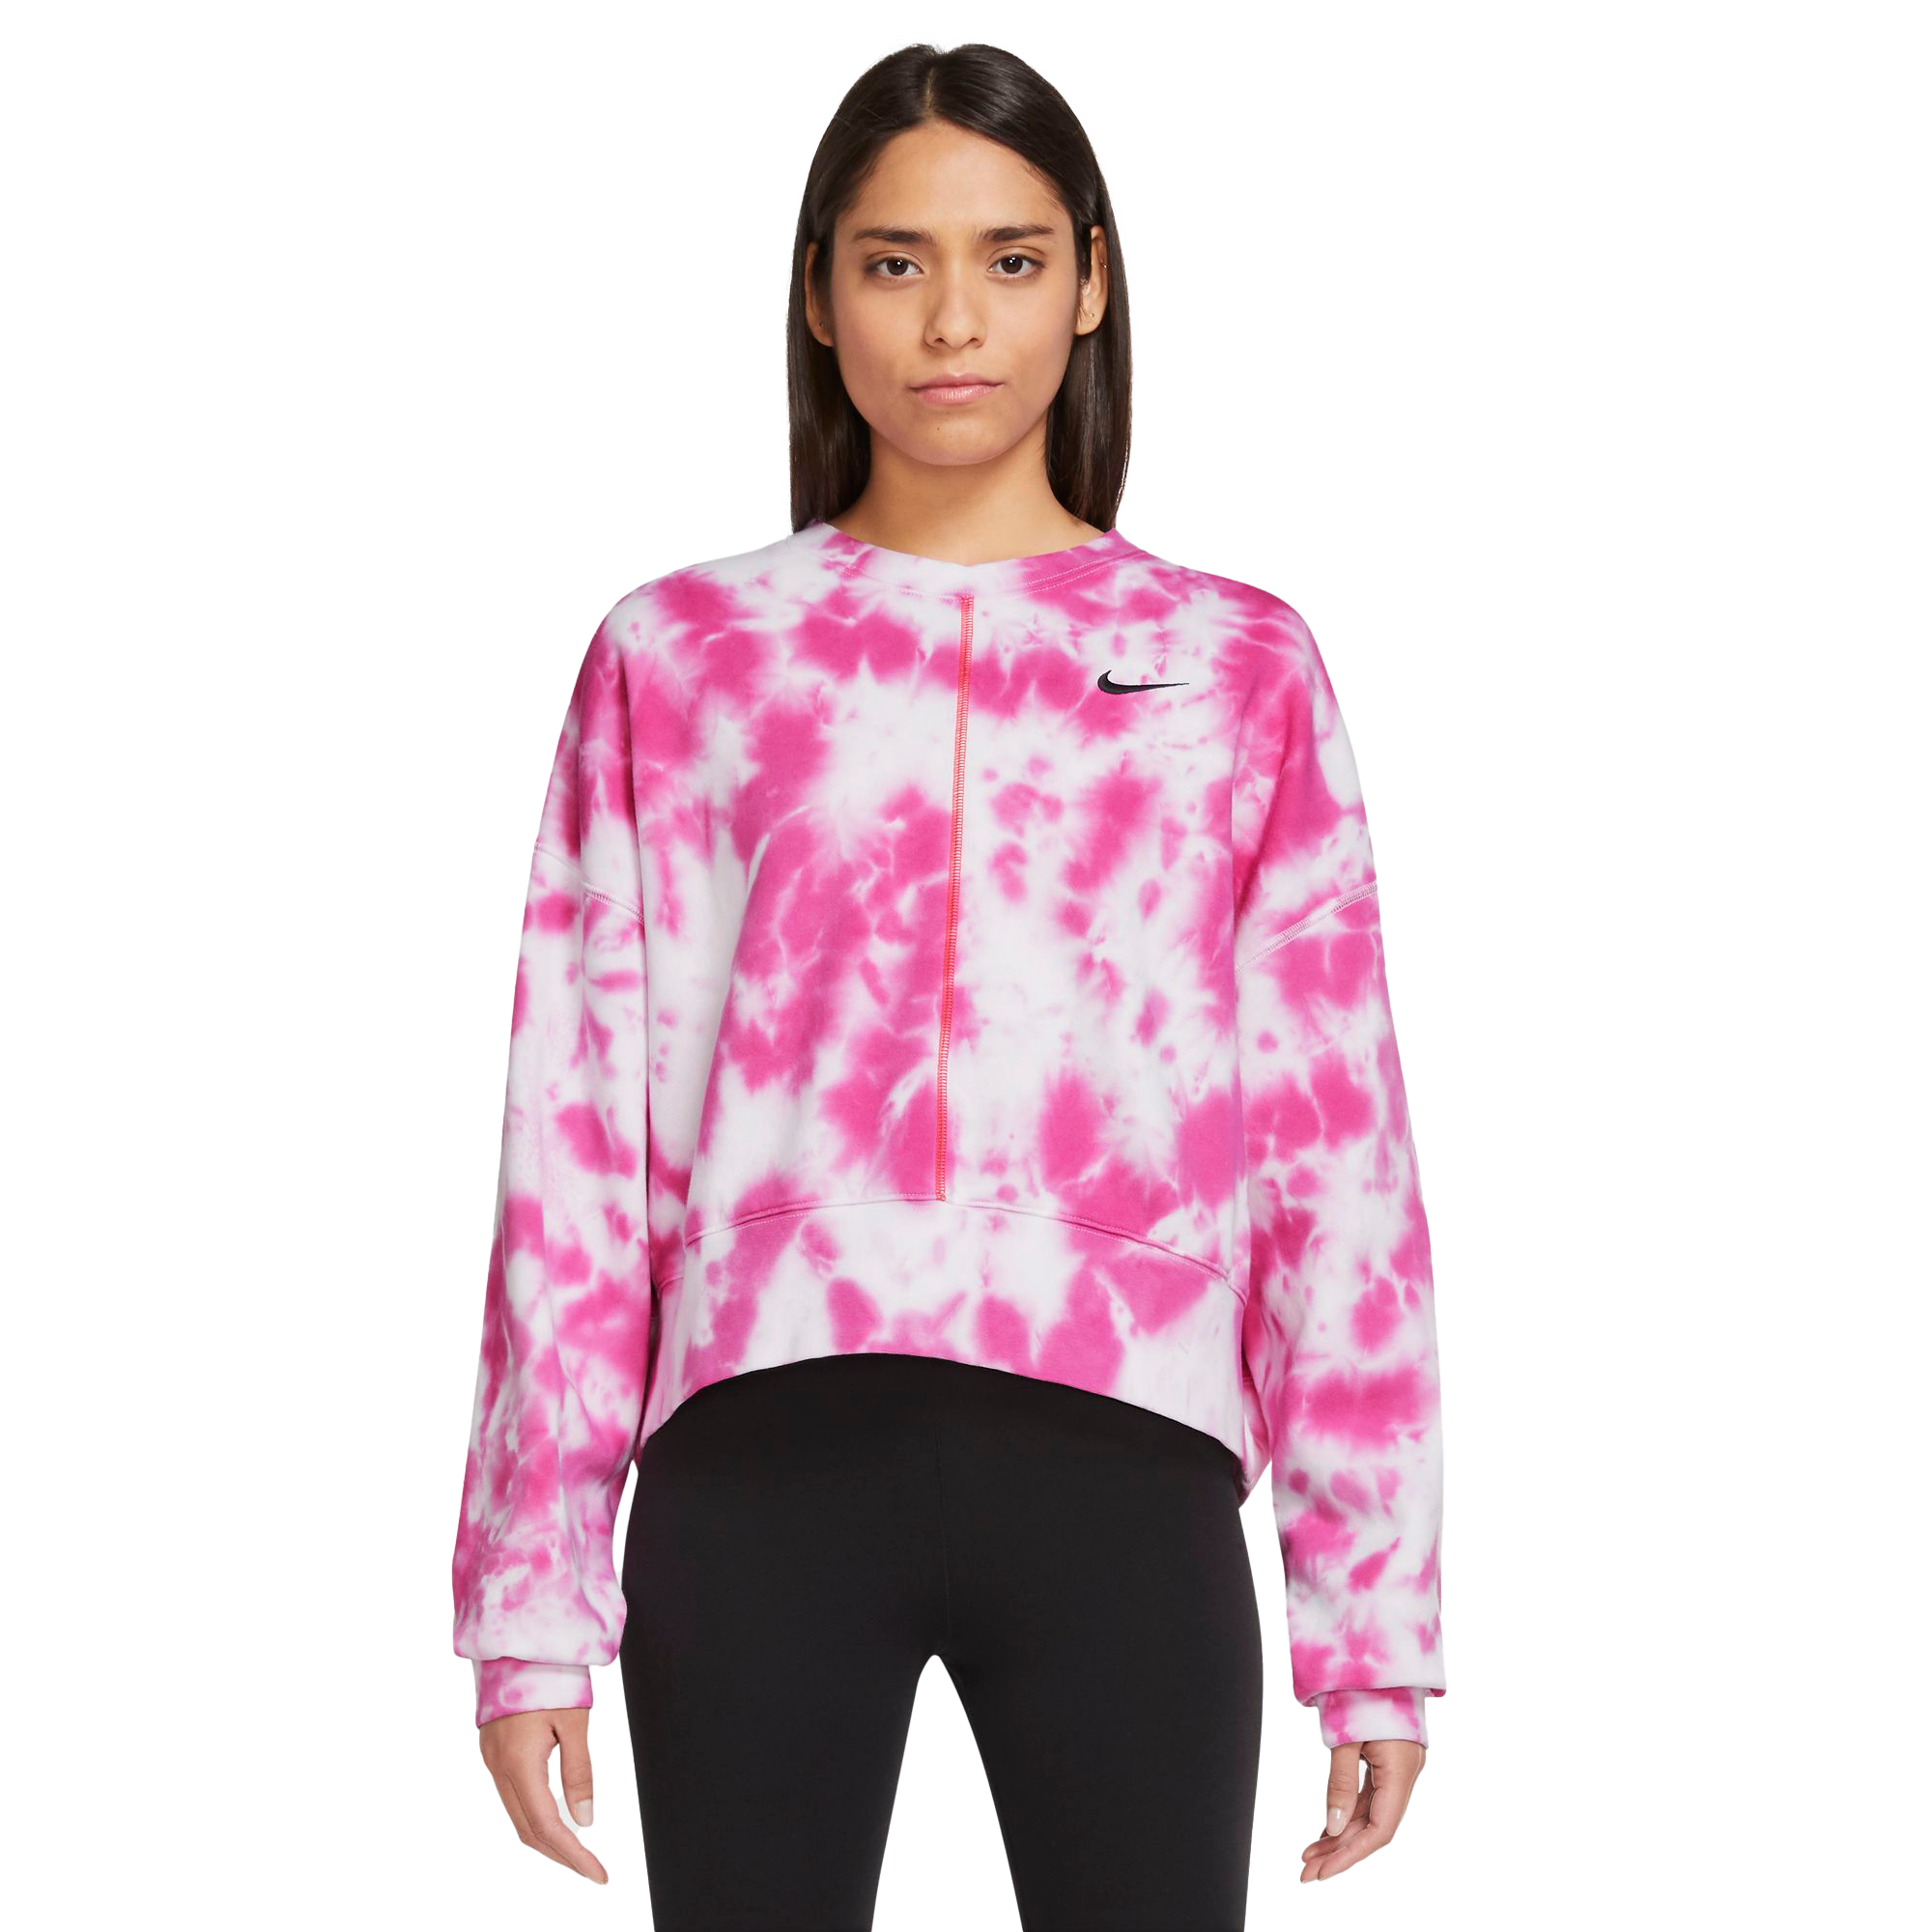 posponer cine Qué Nike Women's Sportswear Tie-Dye Crew "Pink" Sweatshirt